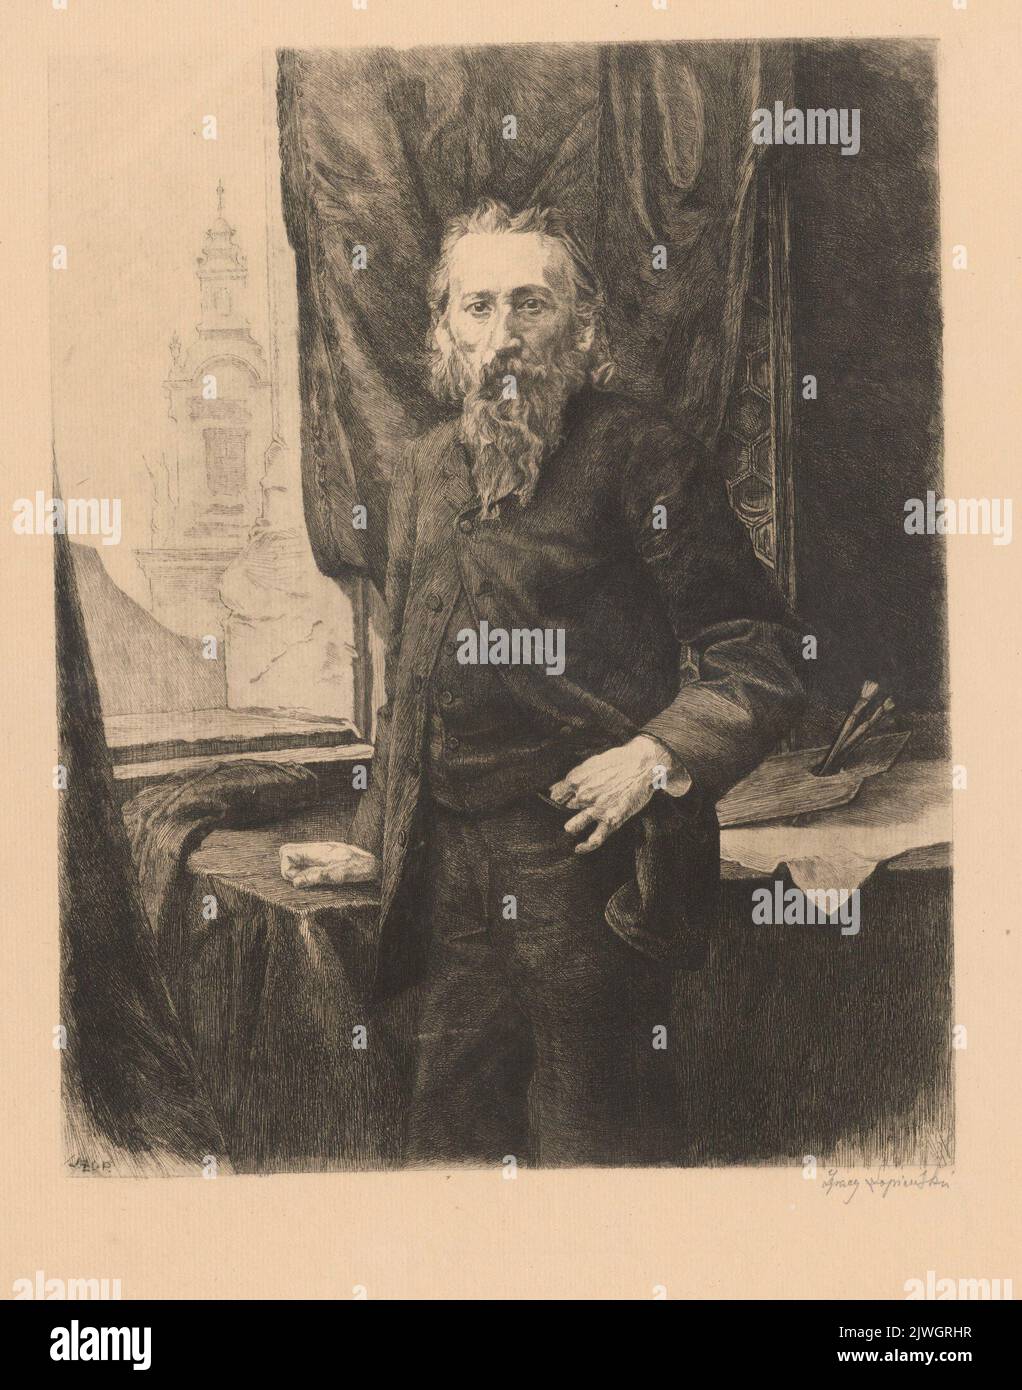 Portrait of Jan Matejko Against Wawel Cathedral Tower. Łopieński, Ignacy (1865-1941), graphic artist Stock Photo